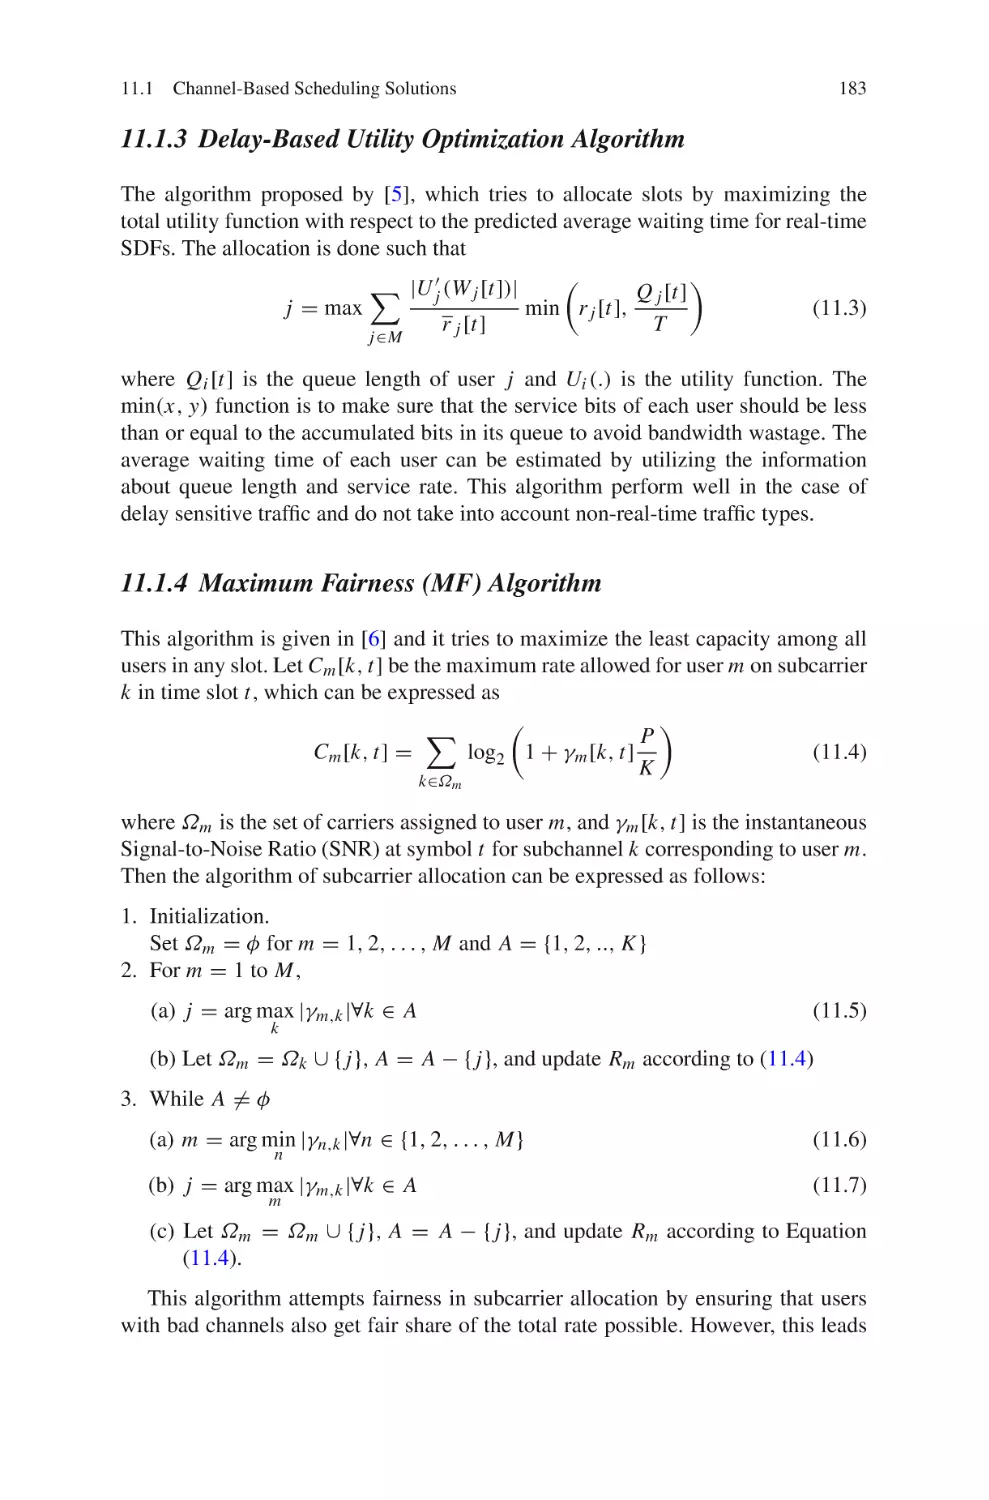 11.1.3  Delay-Based Utility Optimization Algorithm
11.1.4  Maximum Fairness (MF) Algorithm